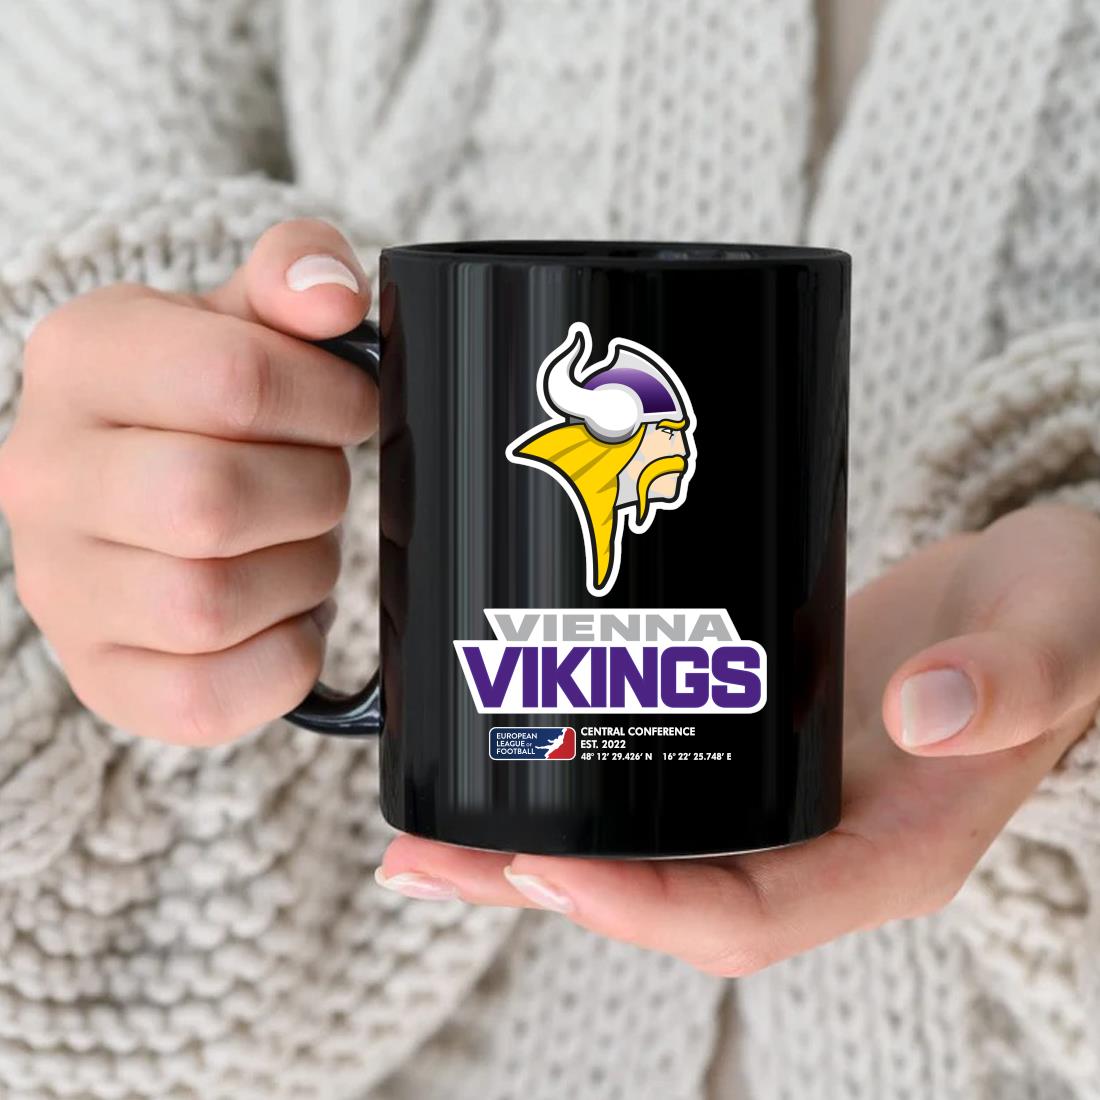 Original Vienna Vikings Dna American Football Club Central Conference Mug